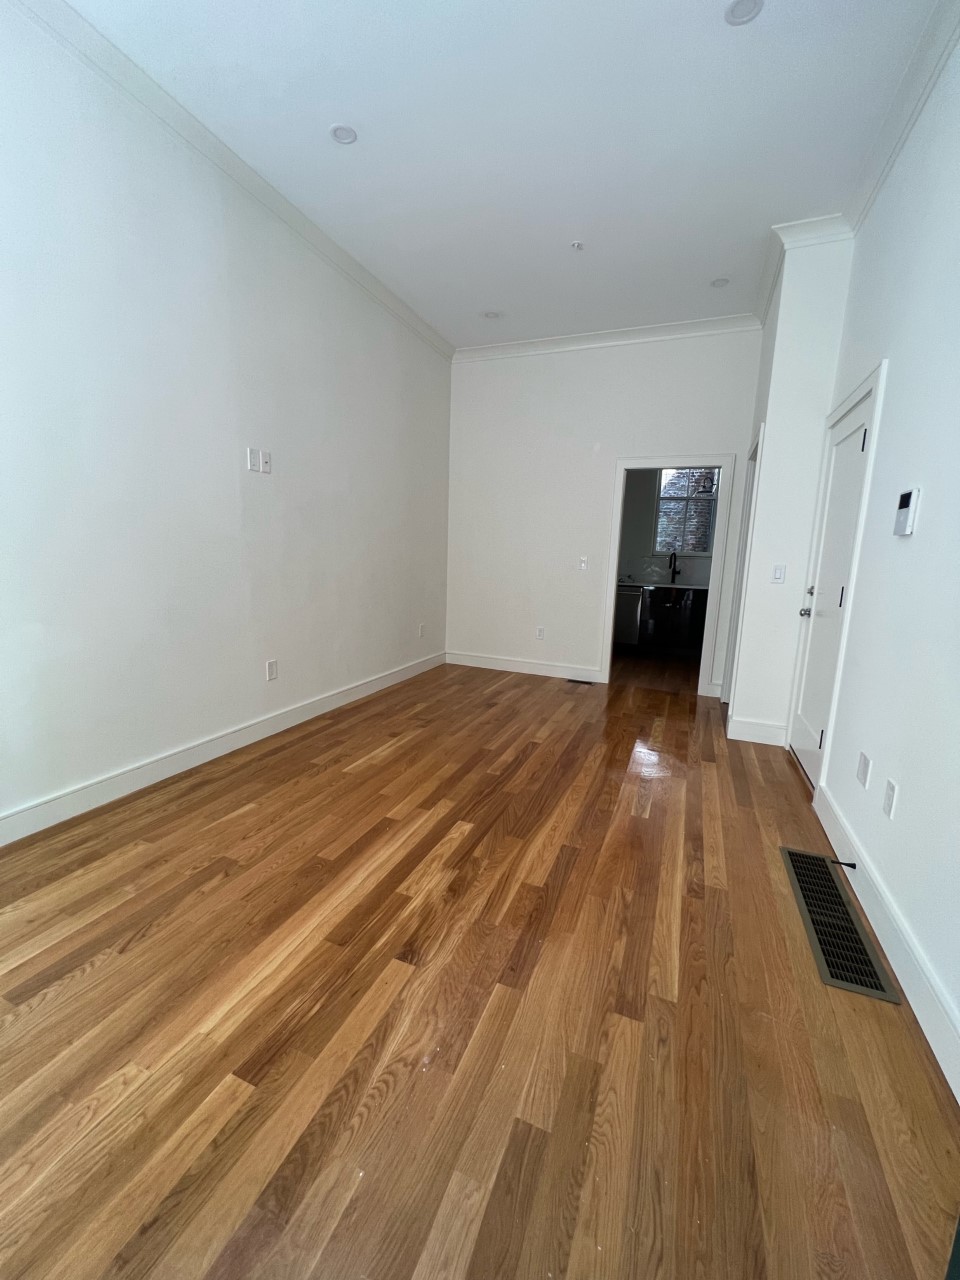 Photos of apartment on Grove St.,Boston MA 02114